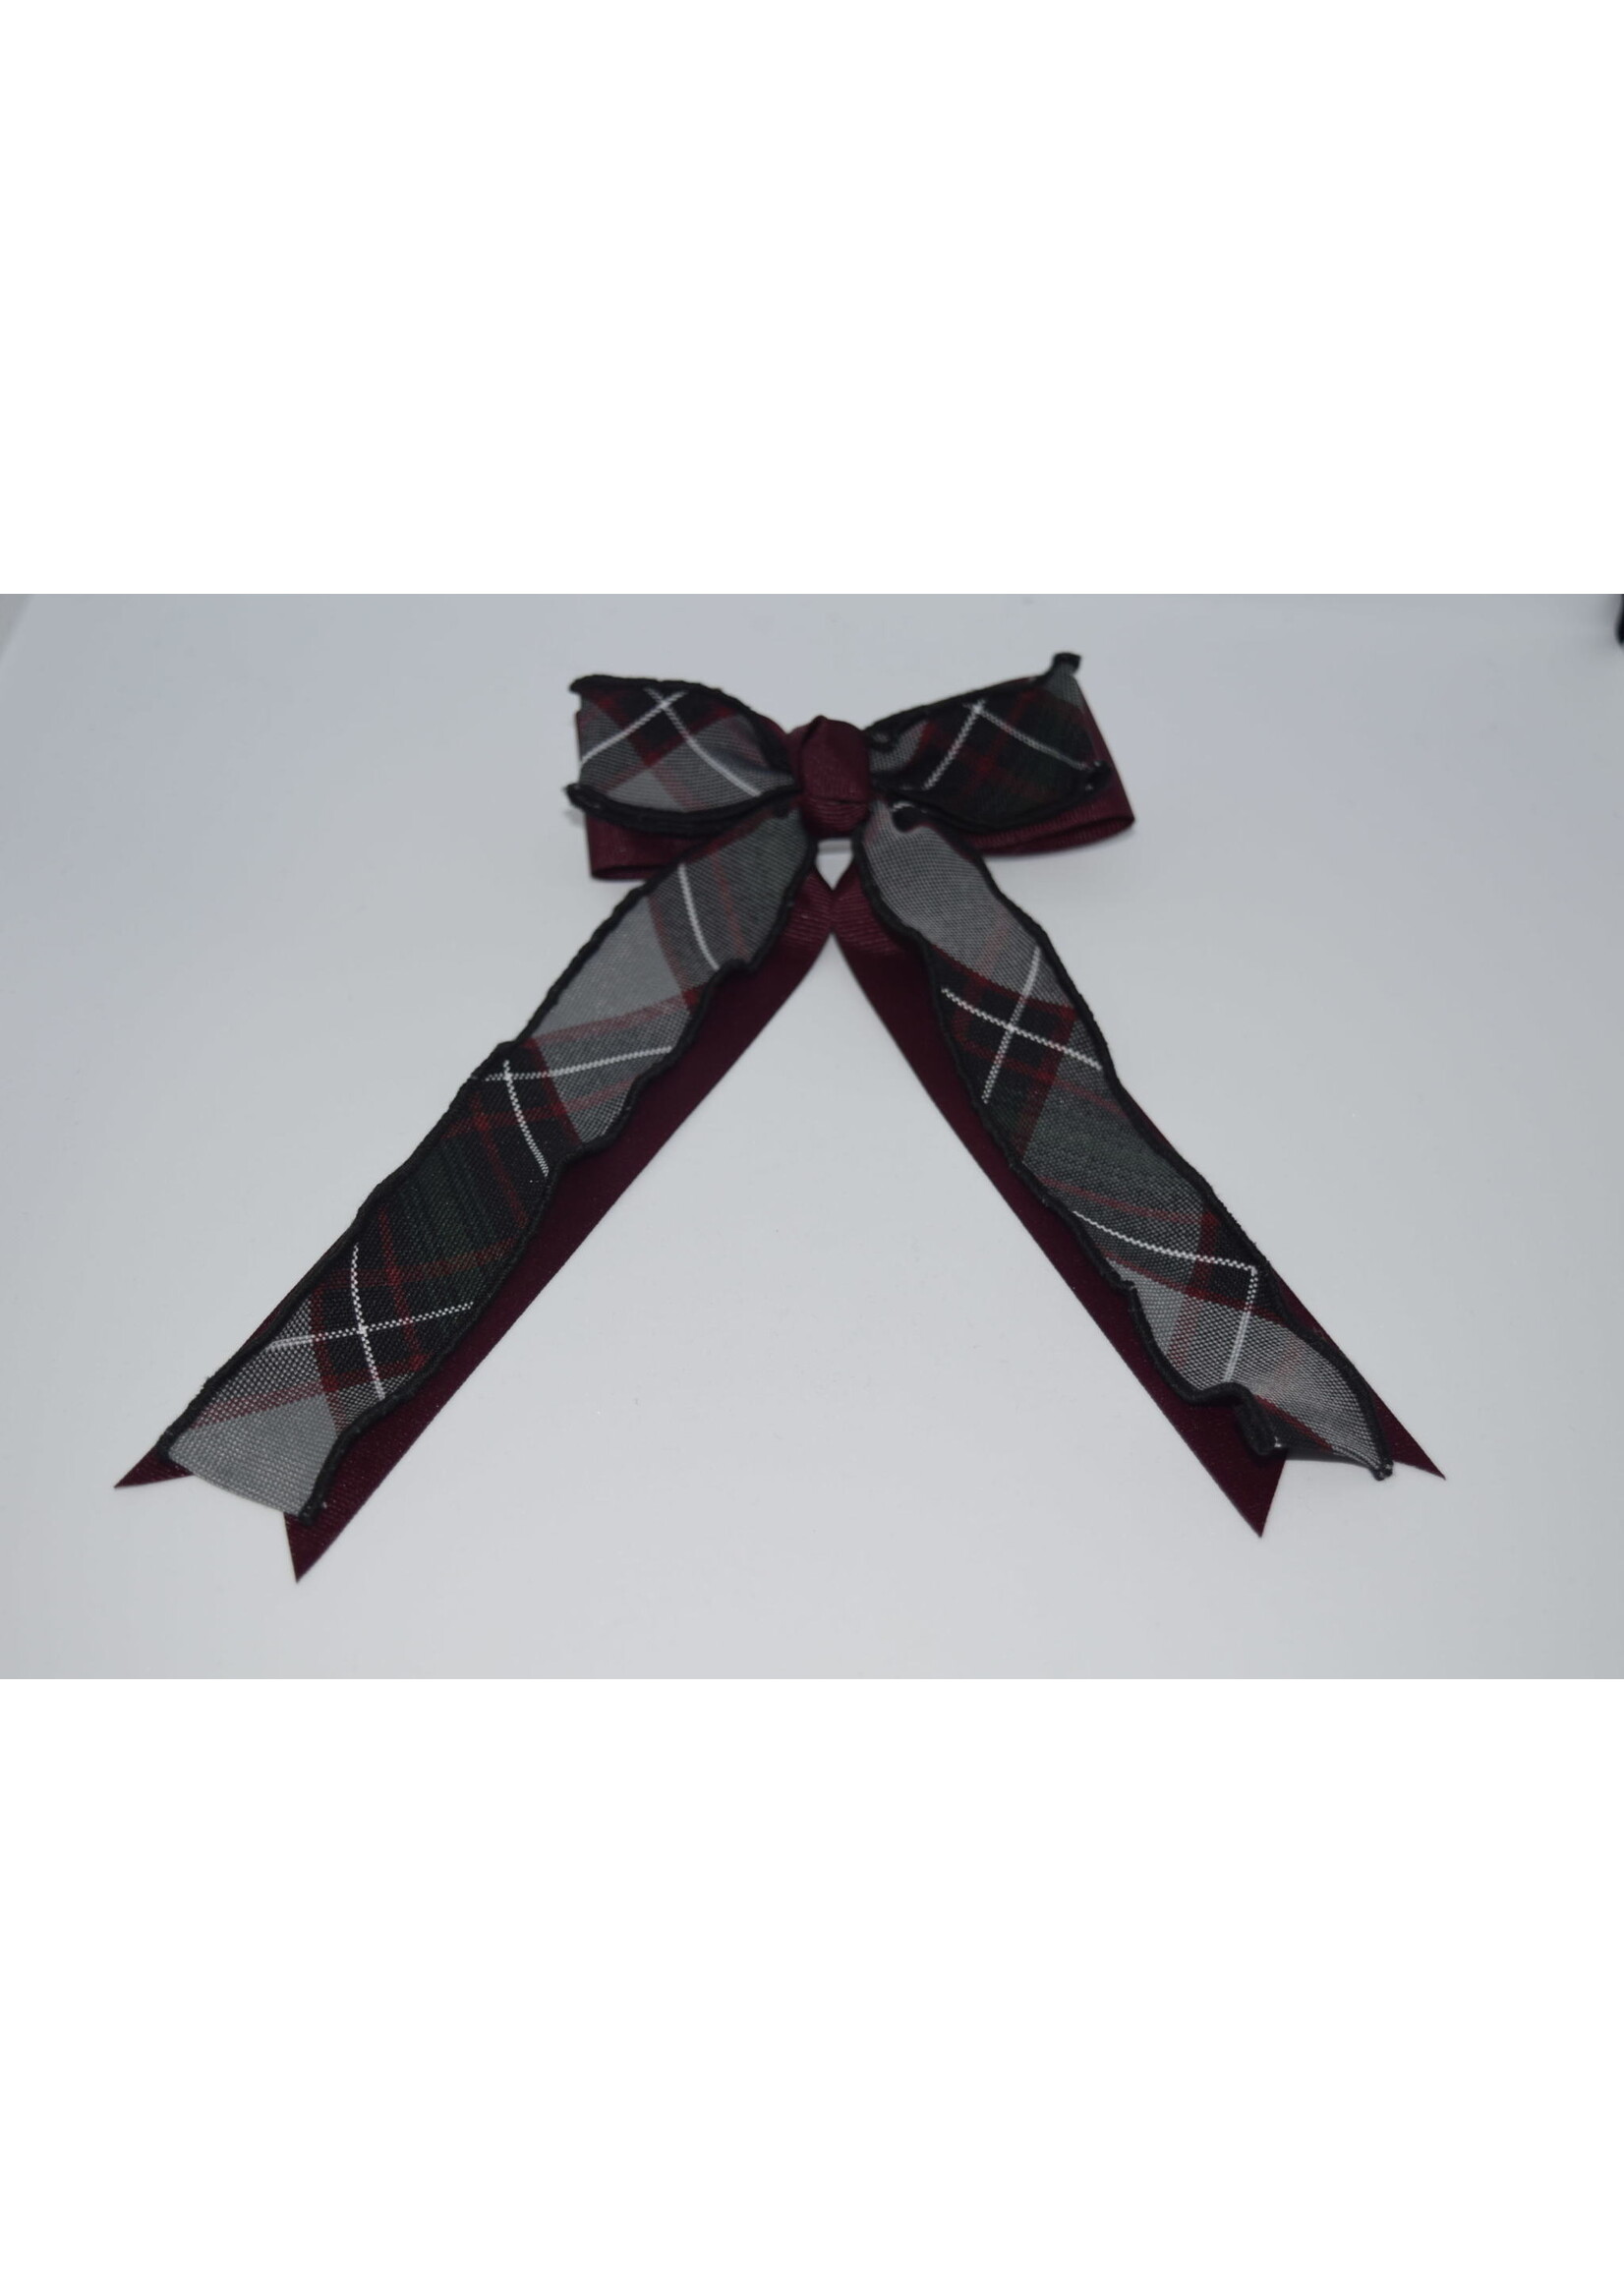 Large 2-layered plaid & grosgrain ribbon bow w/tails P26 BUR